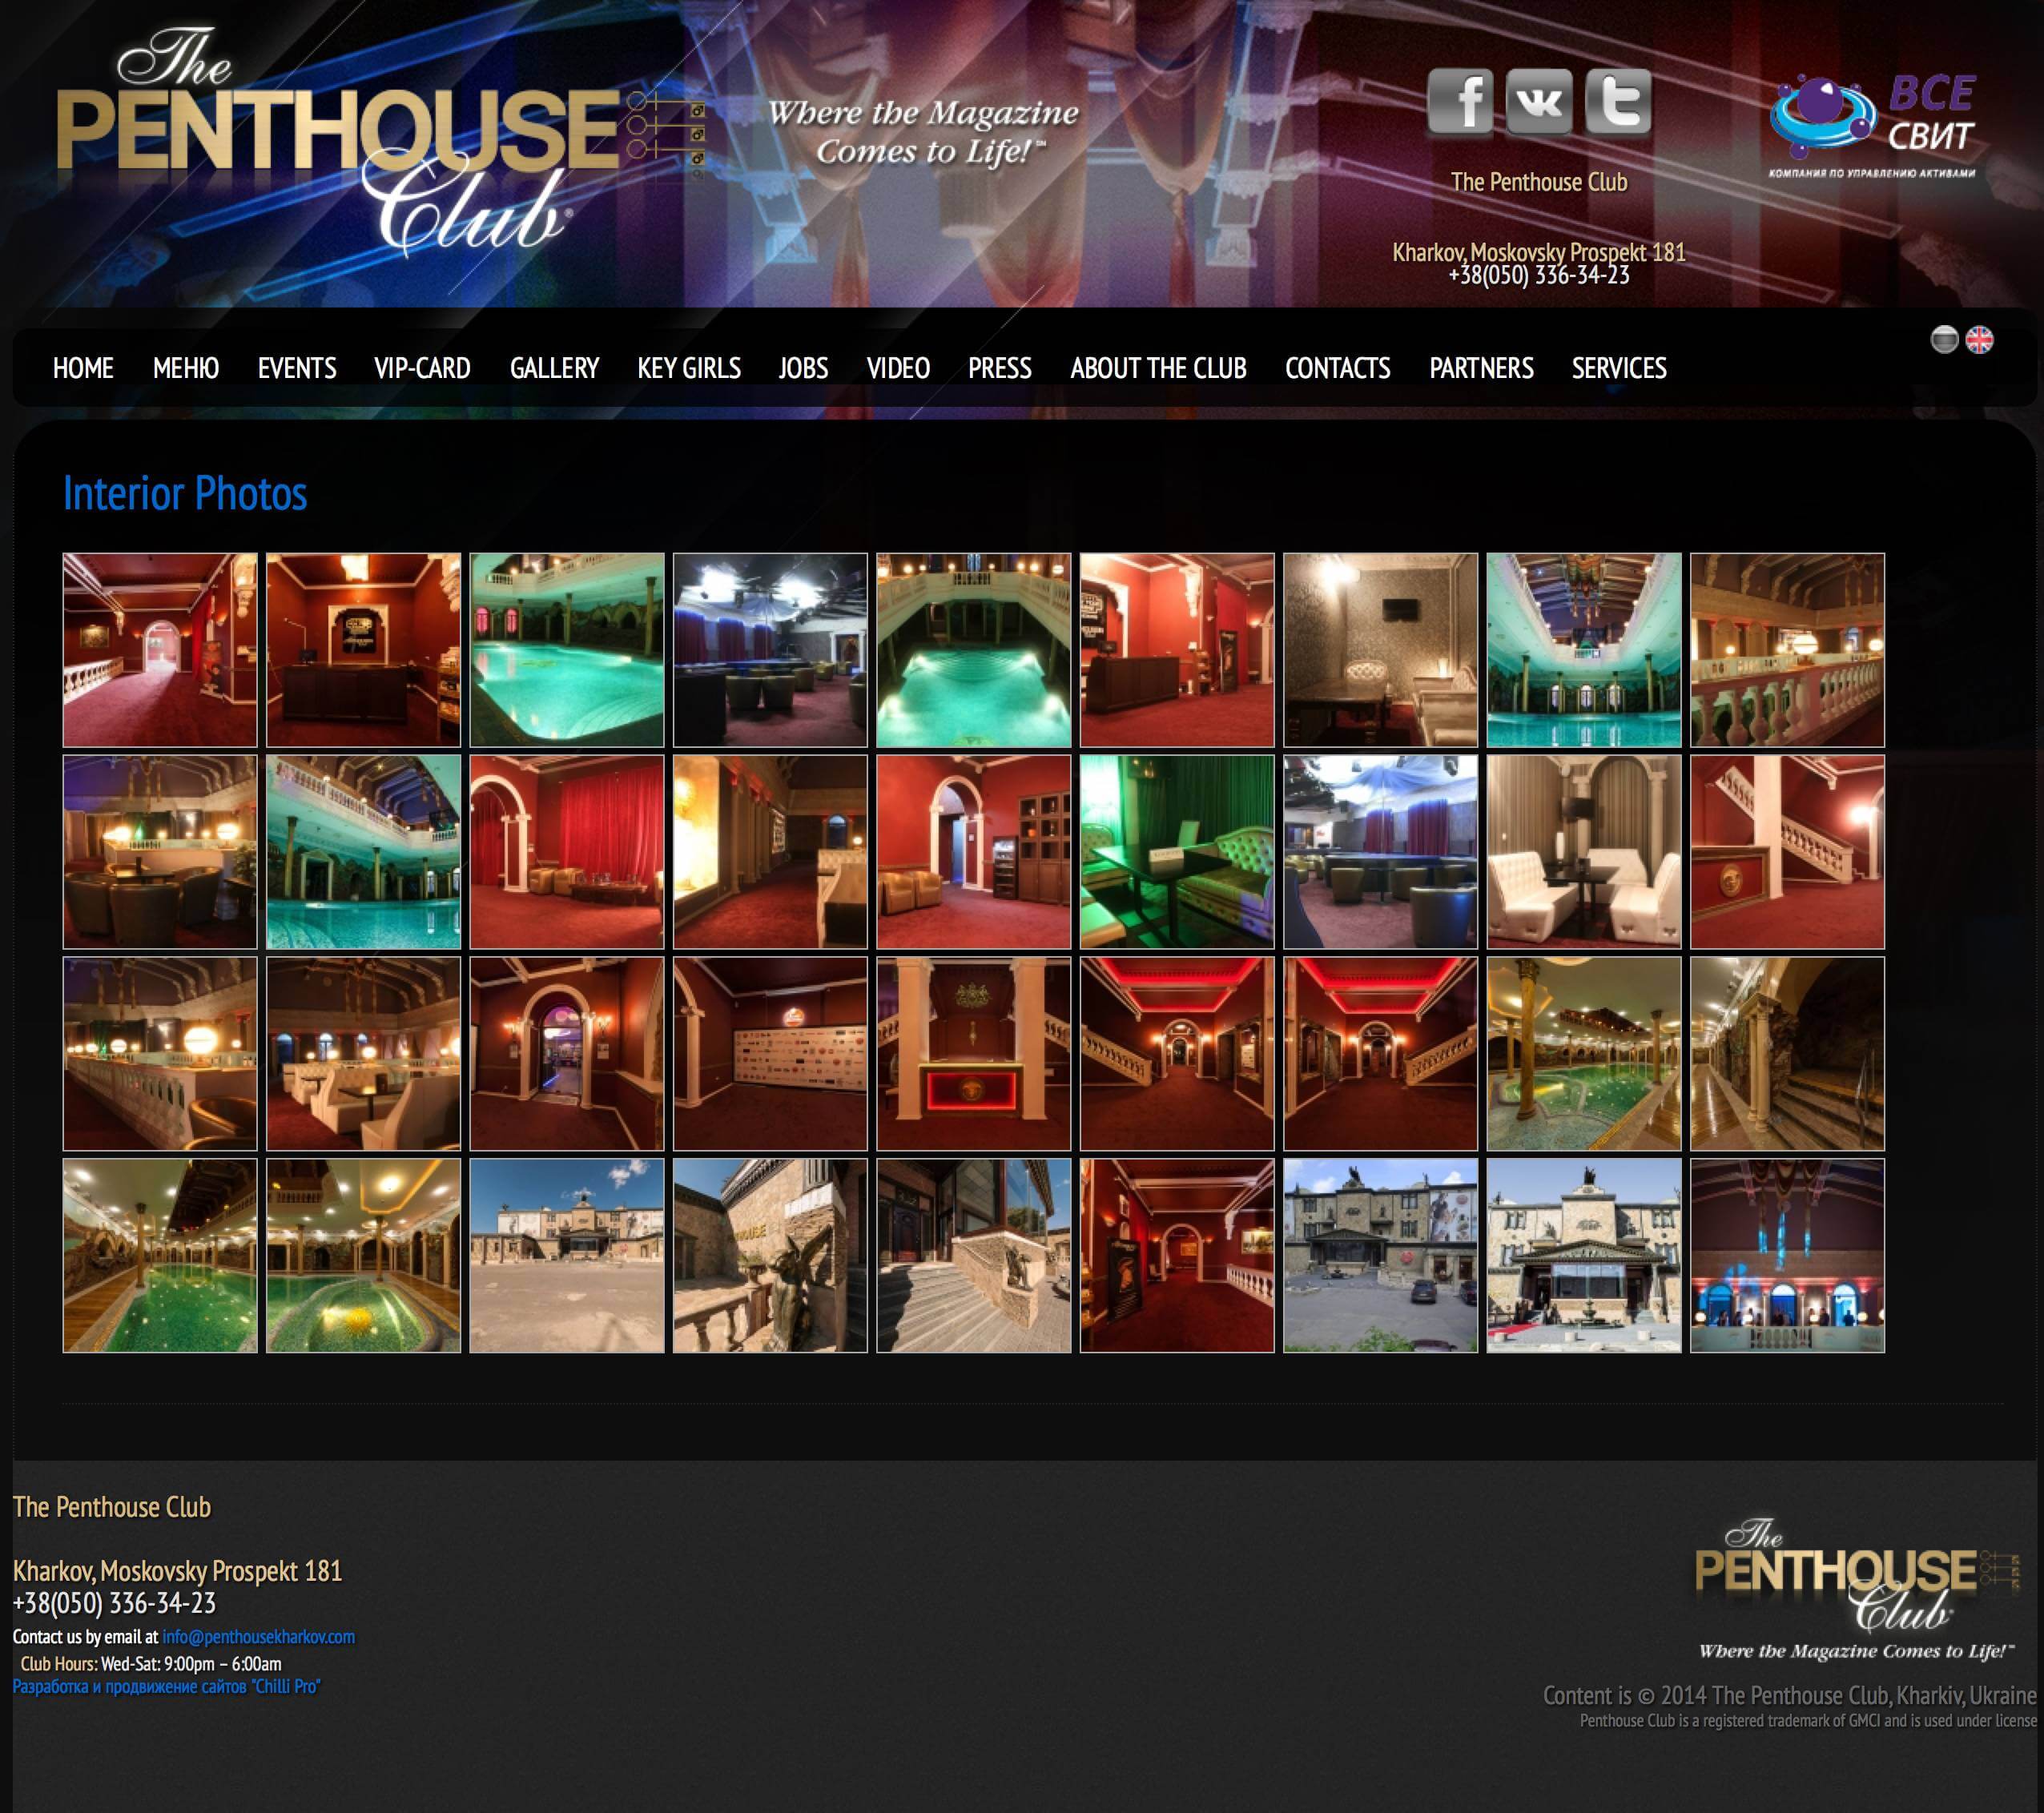 Penthouse club interior photos